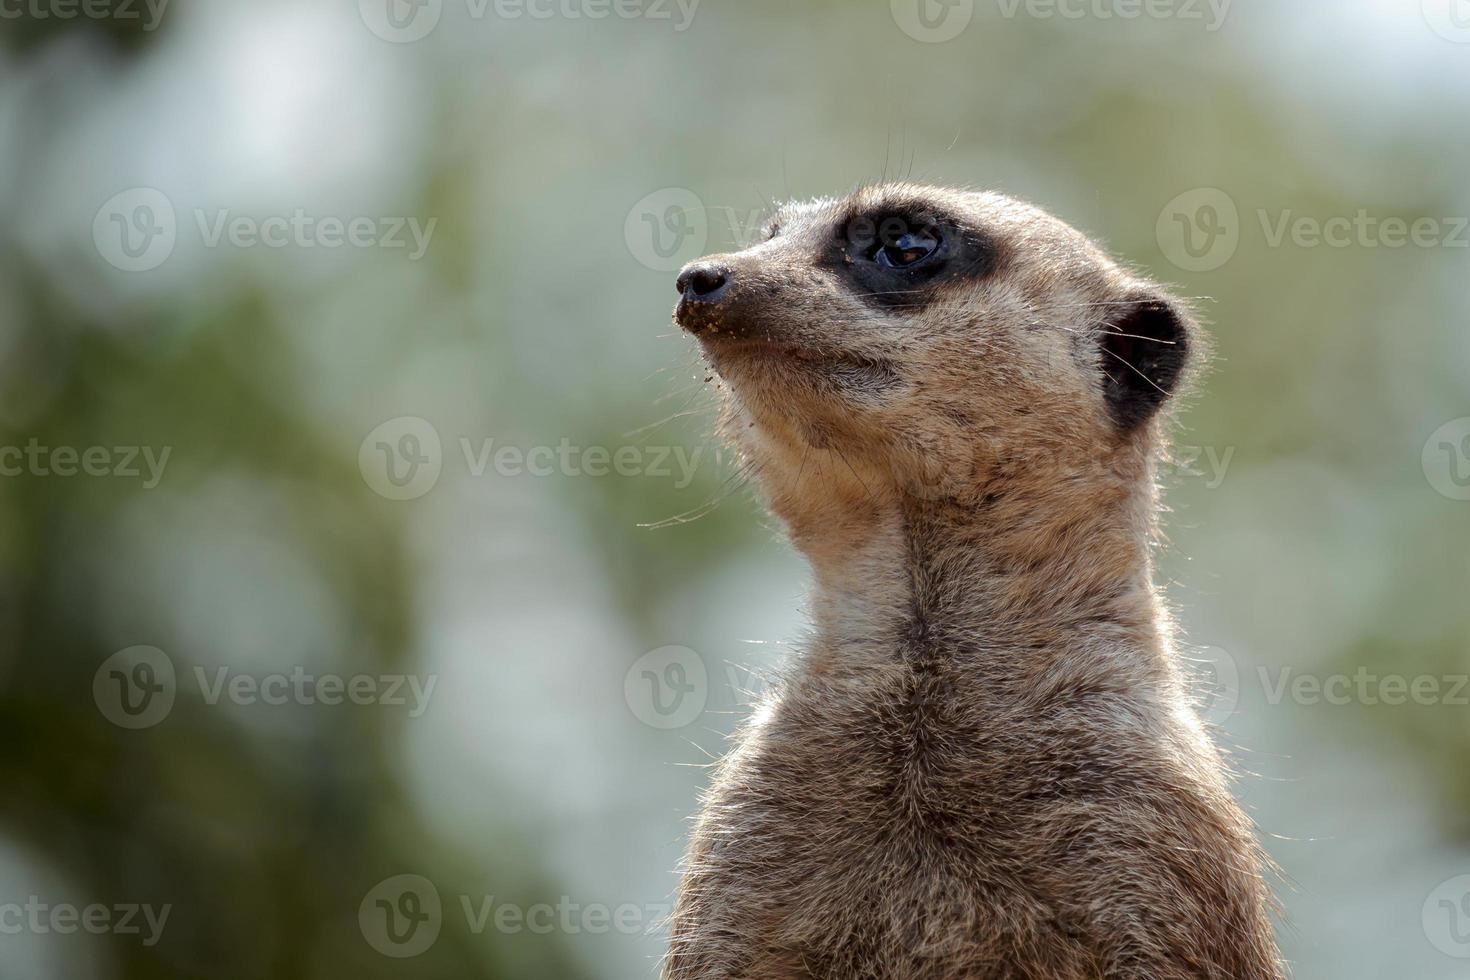 meerkat eller suricate verkande som en vakt foto